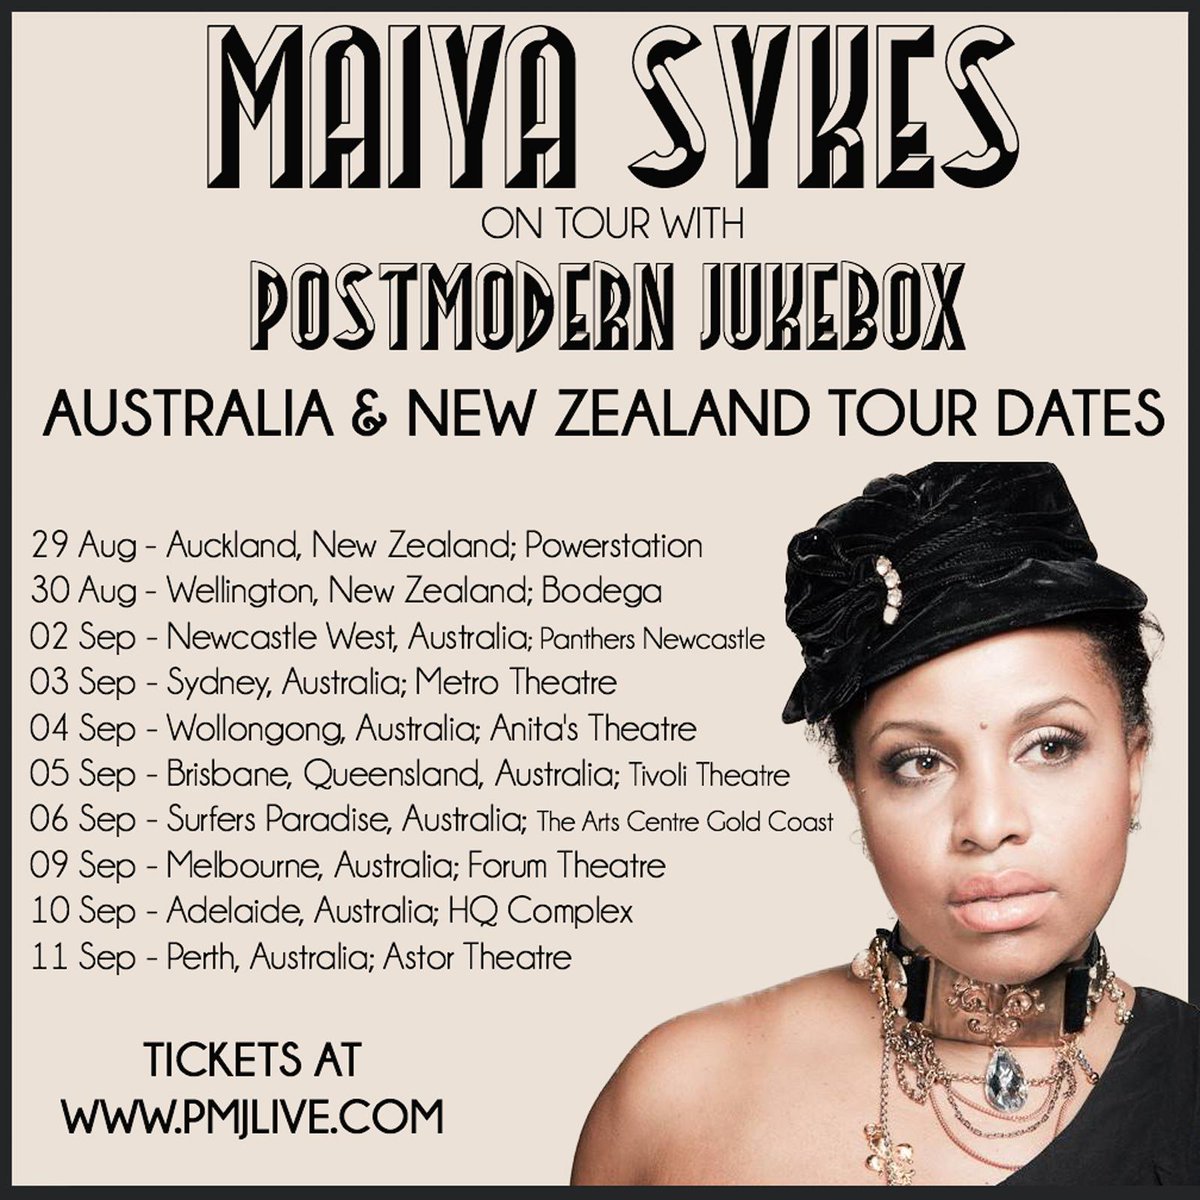 #Australia & #NewZealand get your #PMJ #Vintage fix with #postmodernjukebox & #Maiyasykes #pmjtour launches next week